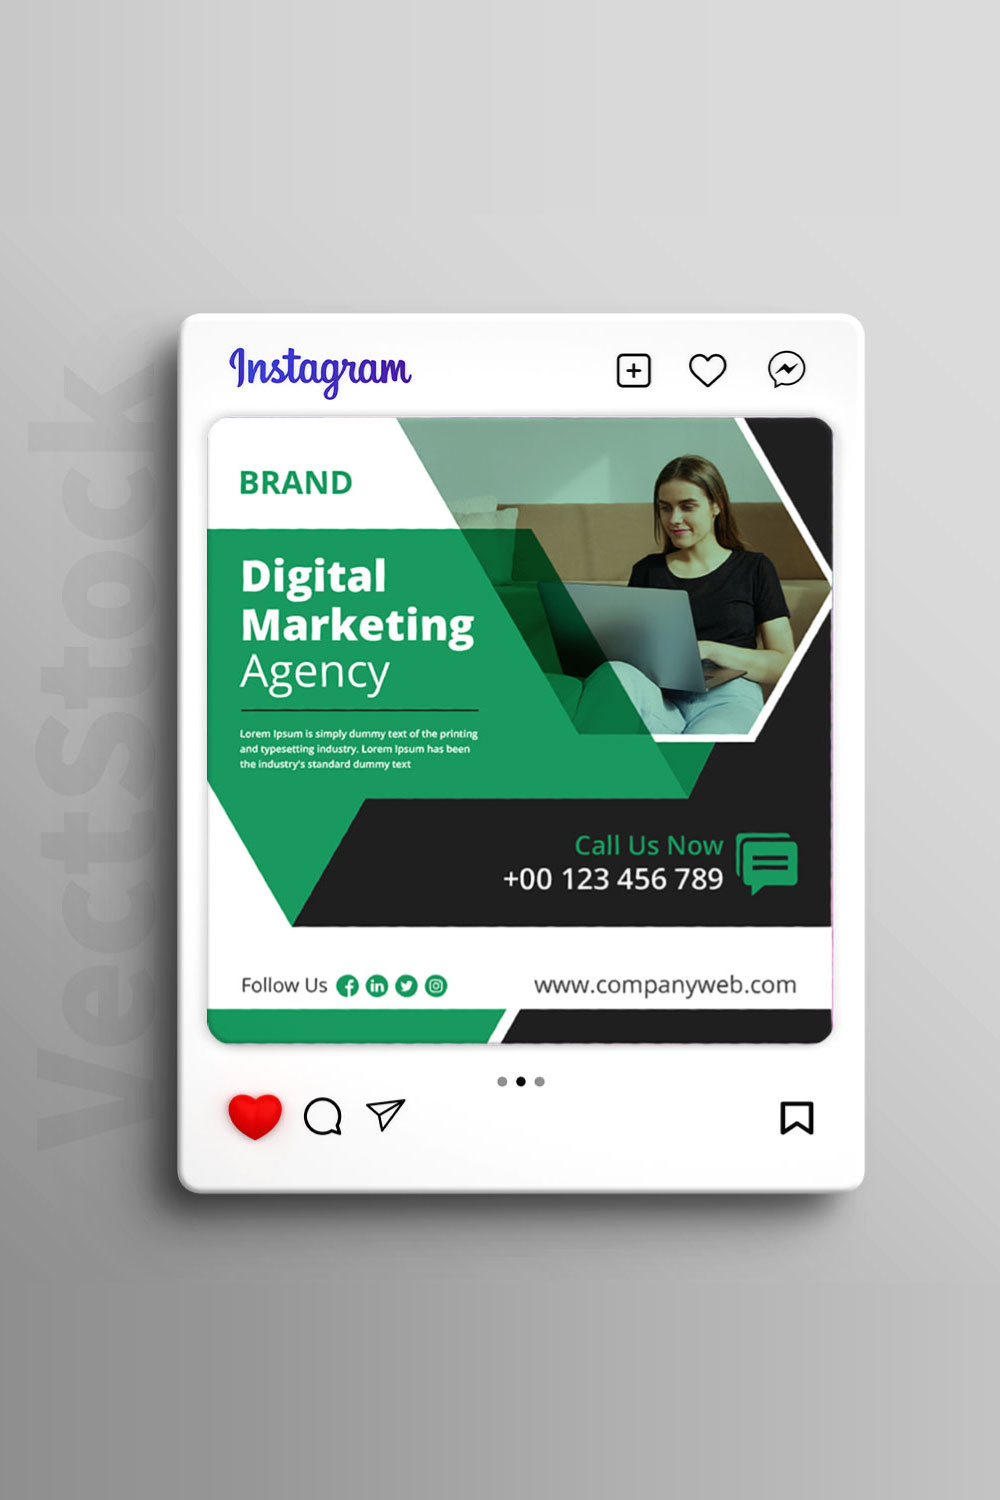 Digital marketing agency social media Instagram post and banner template design pinterest preview image.